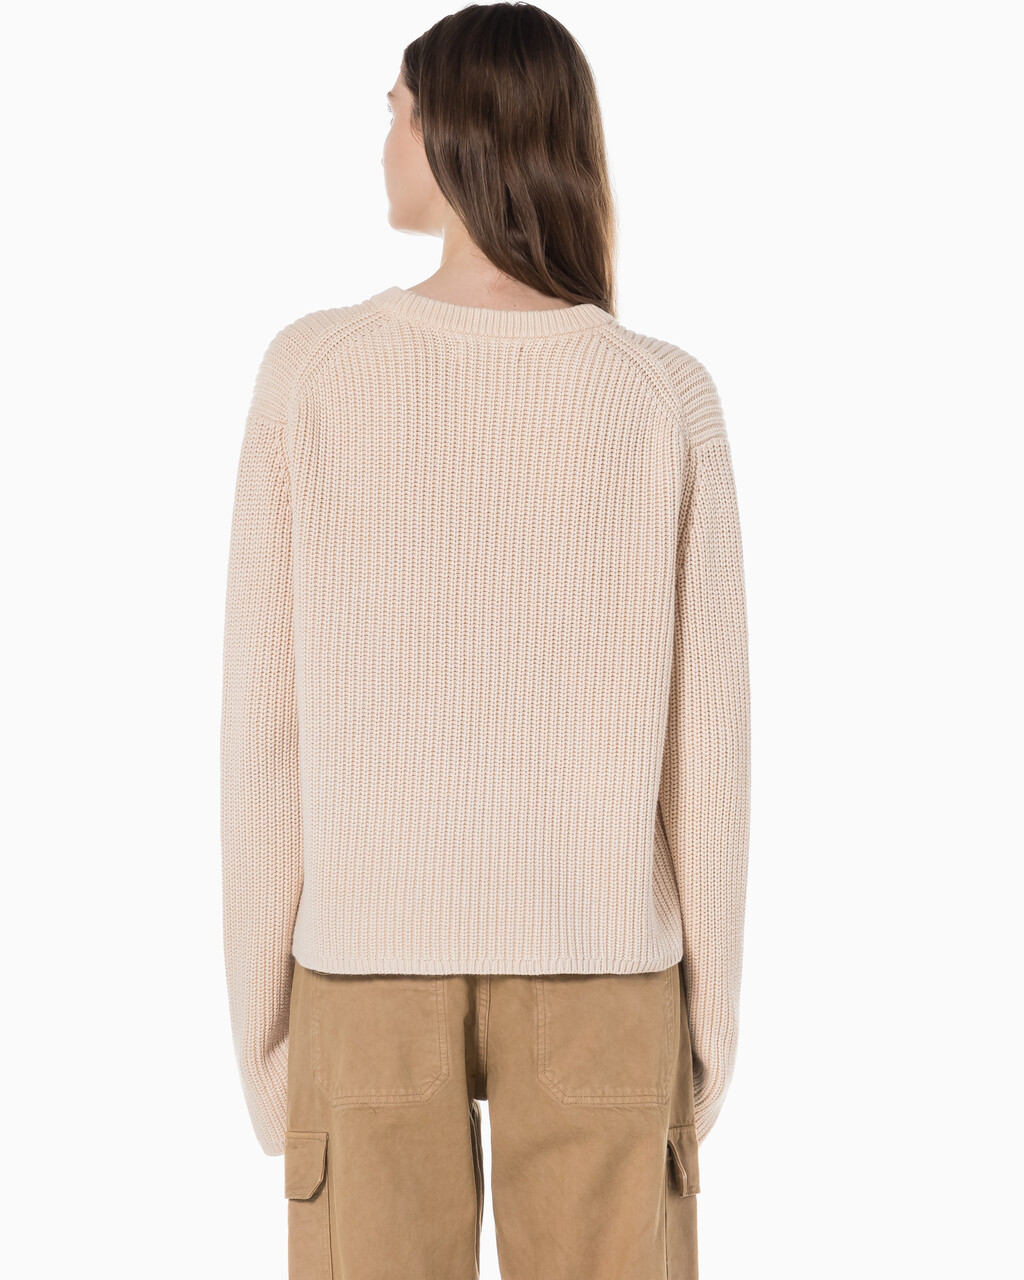 Buy 여성 롱슬리브 라운드넥 스웨터 in color Neutral Tan-231ABZ